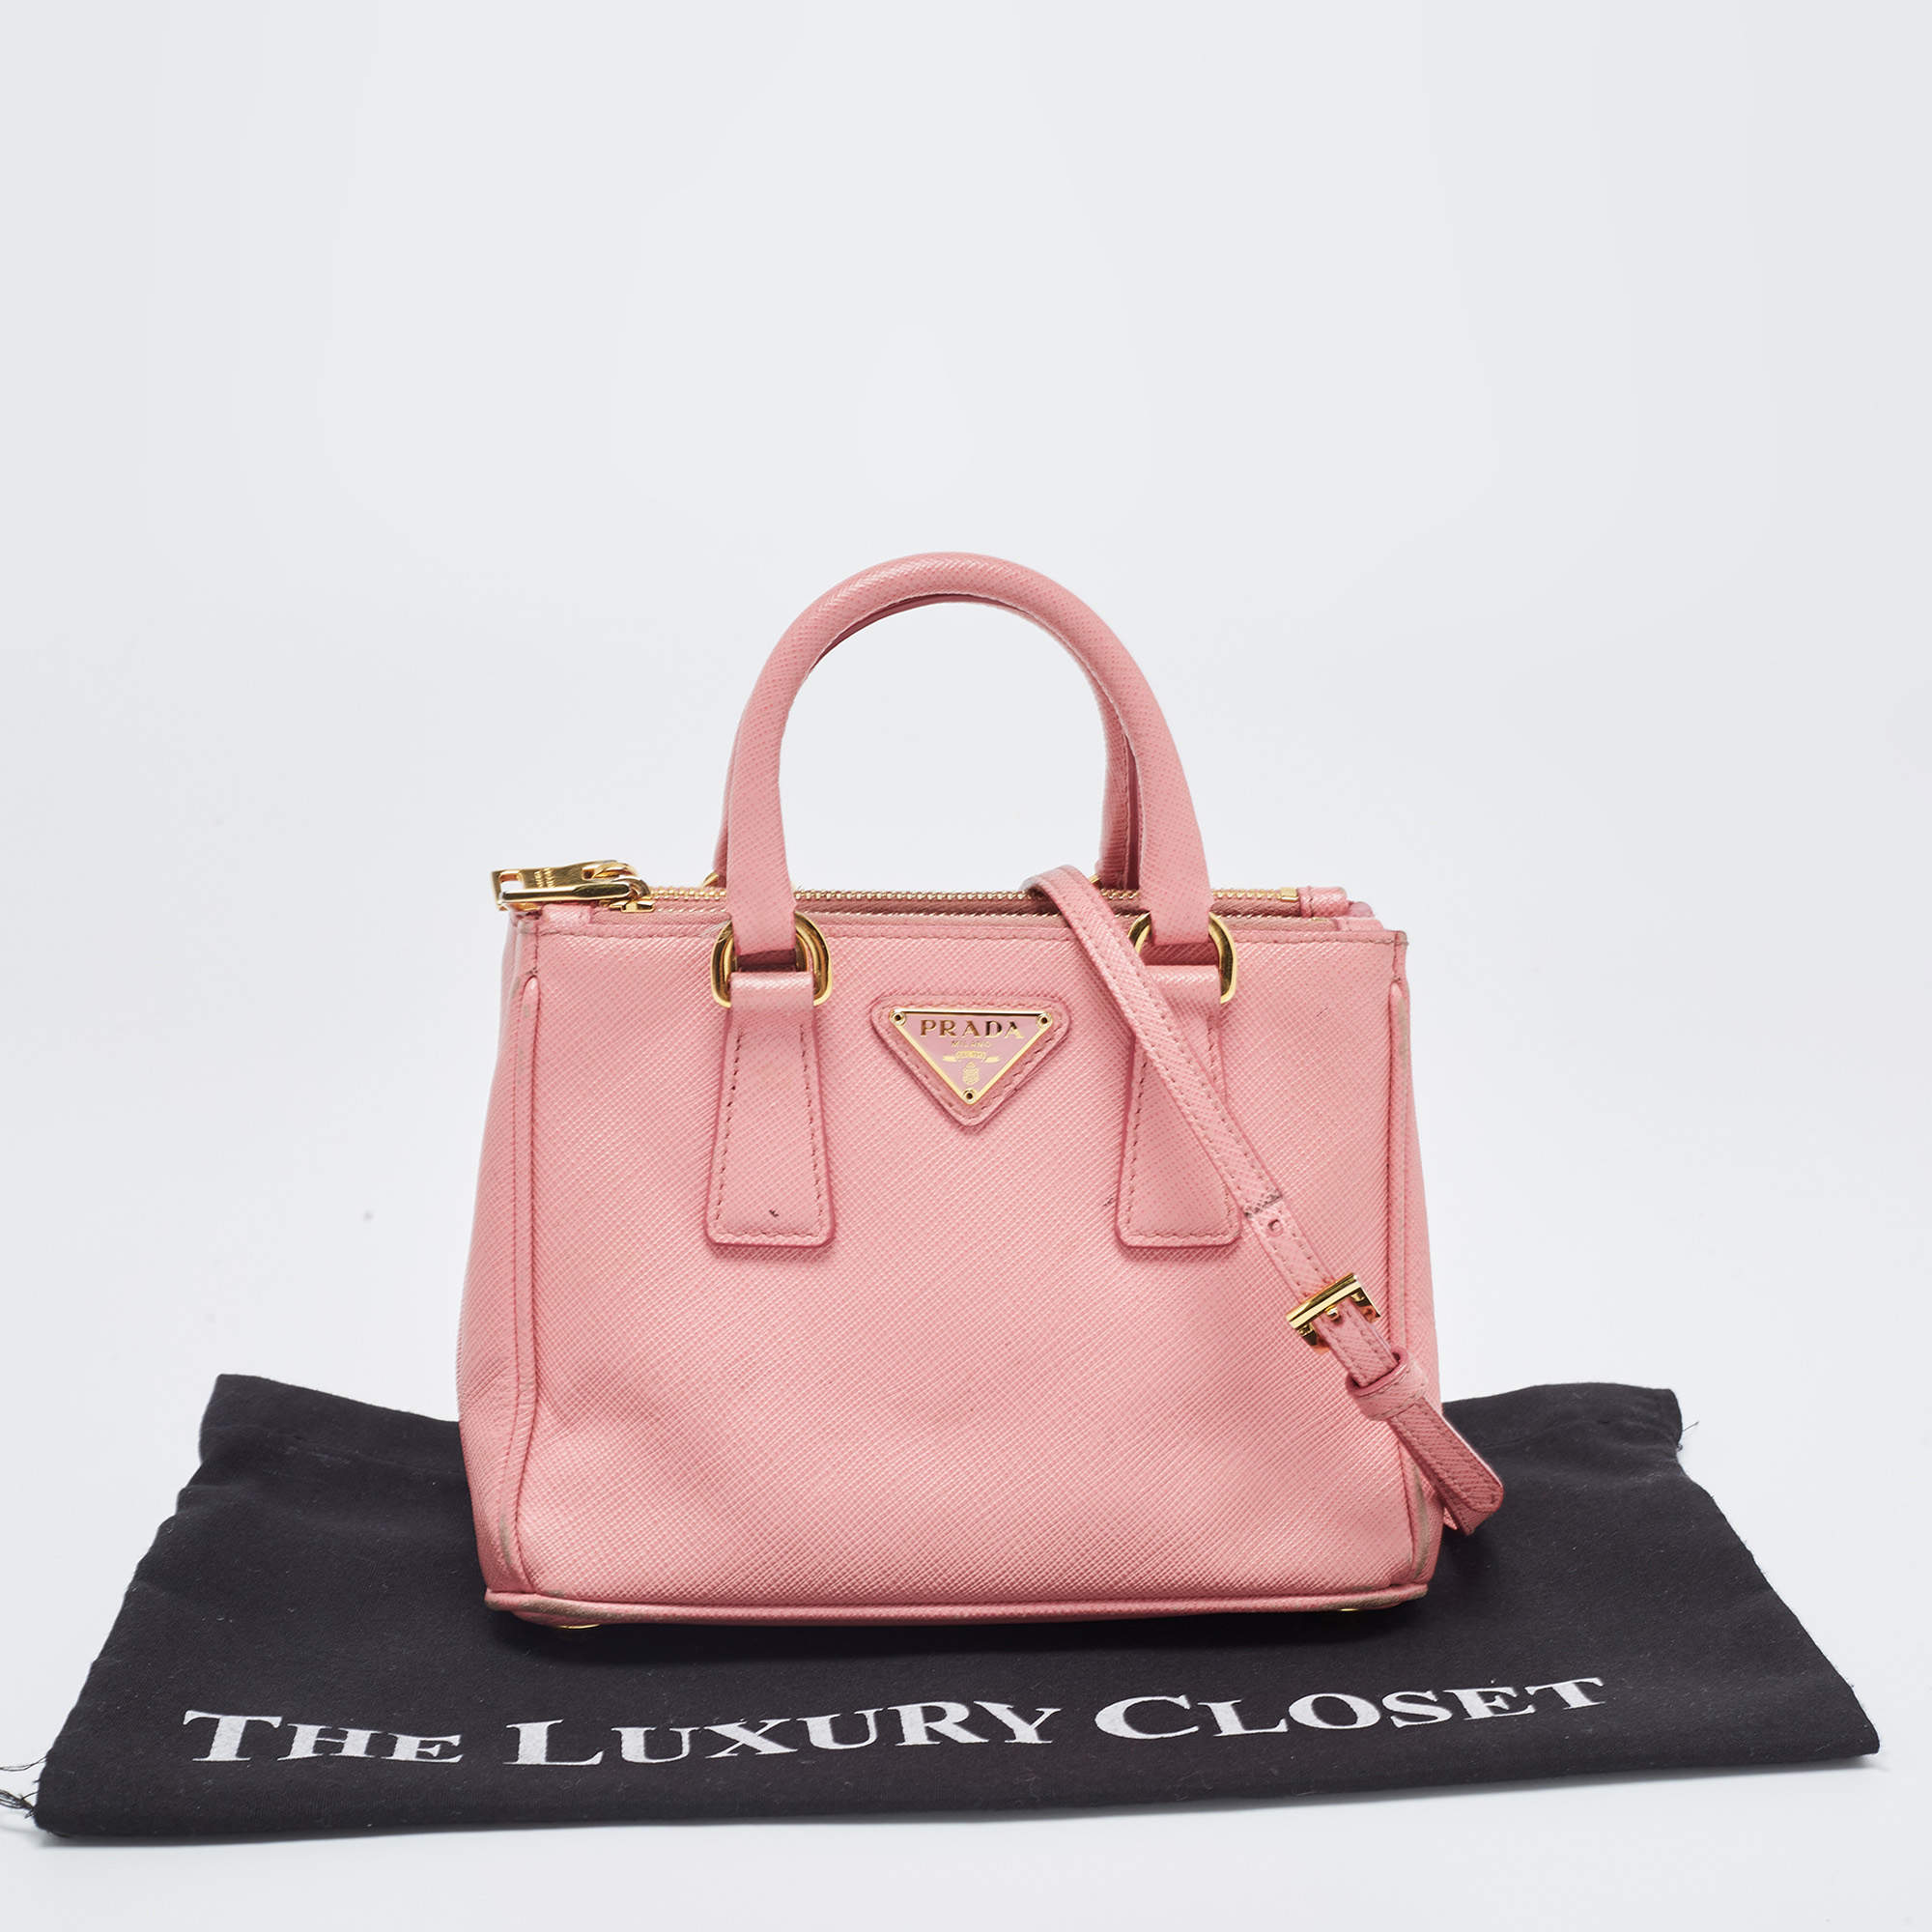 Prada Galleria leather micro bag for Women - Pink in UAE